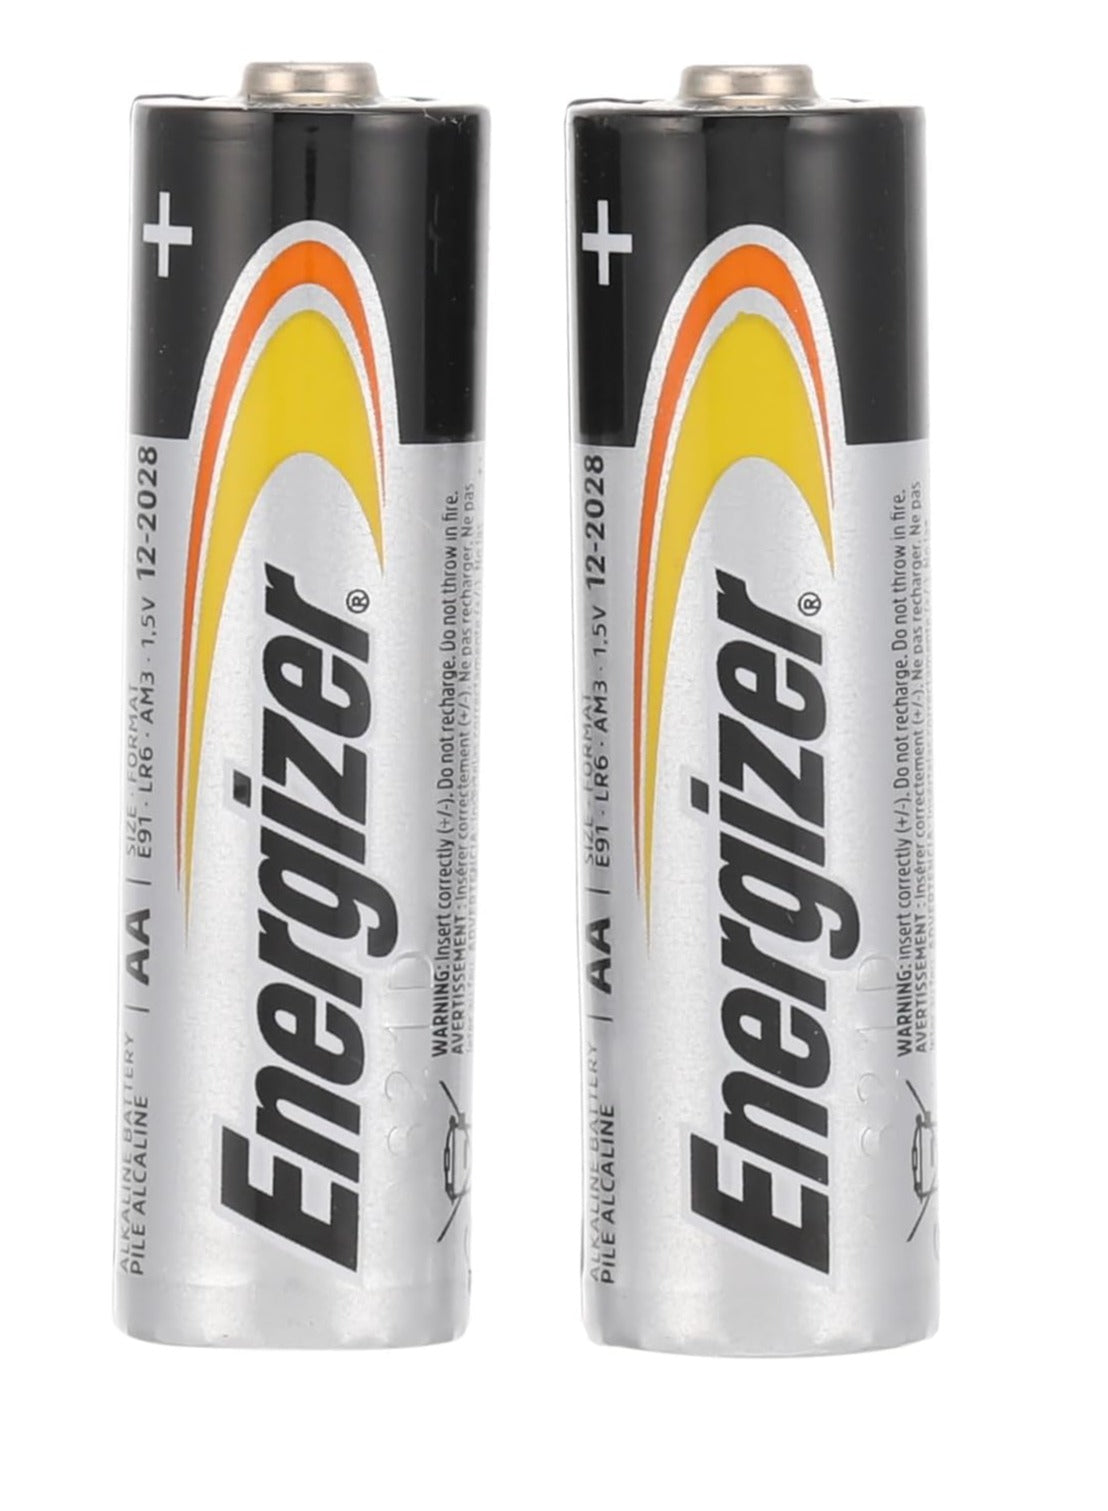 Energizer Battery AA2 Alkaline Power , Long Lasting Power 1.5 Volts